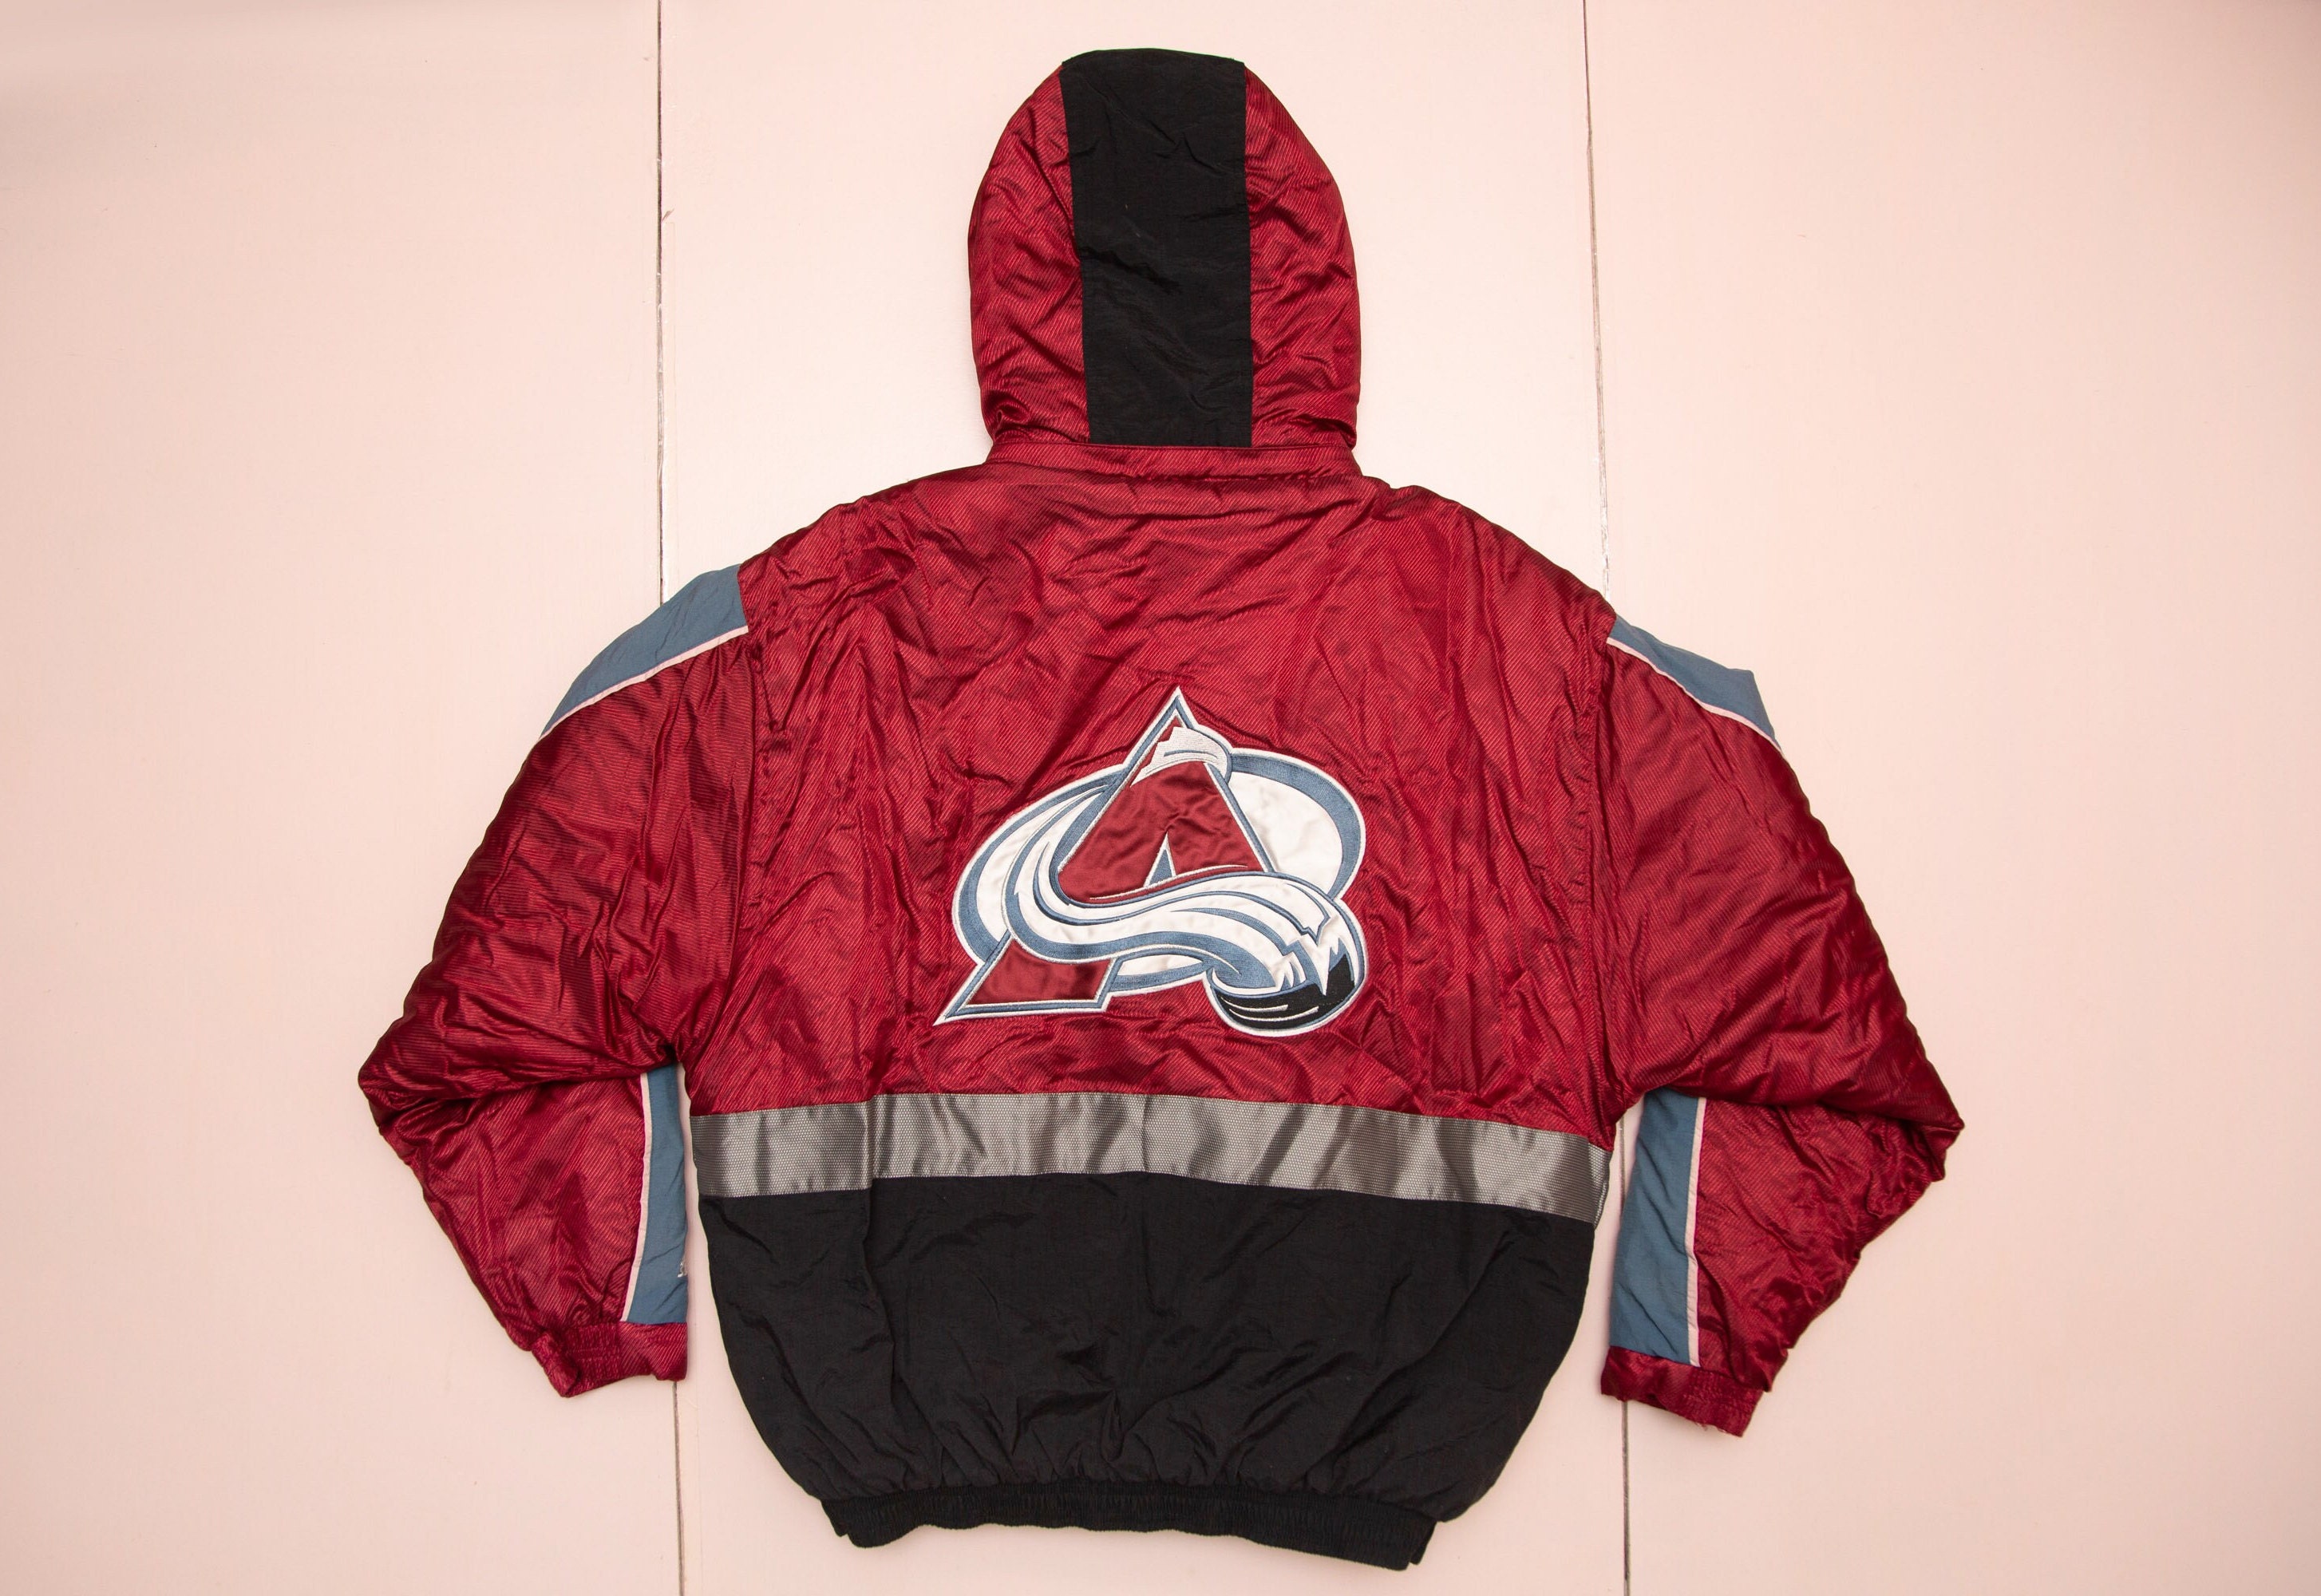 NEW* Nathan MacKinnon Reverse Retro CO Avalanche NHL Jersey Size XL 54